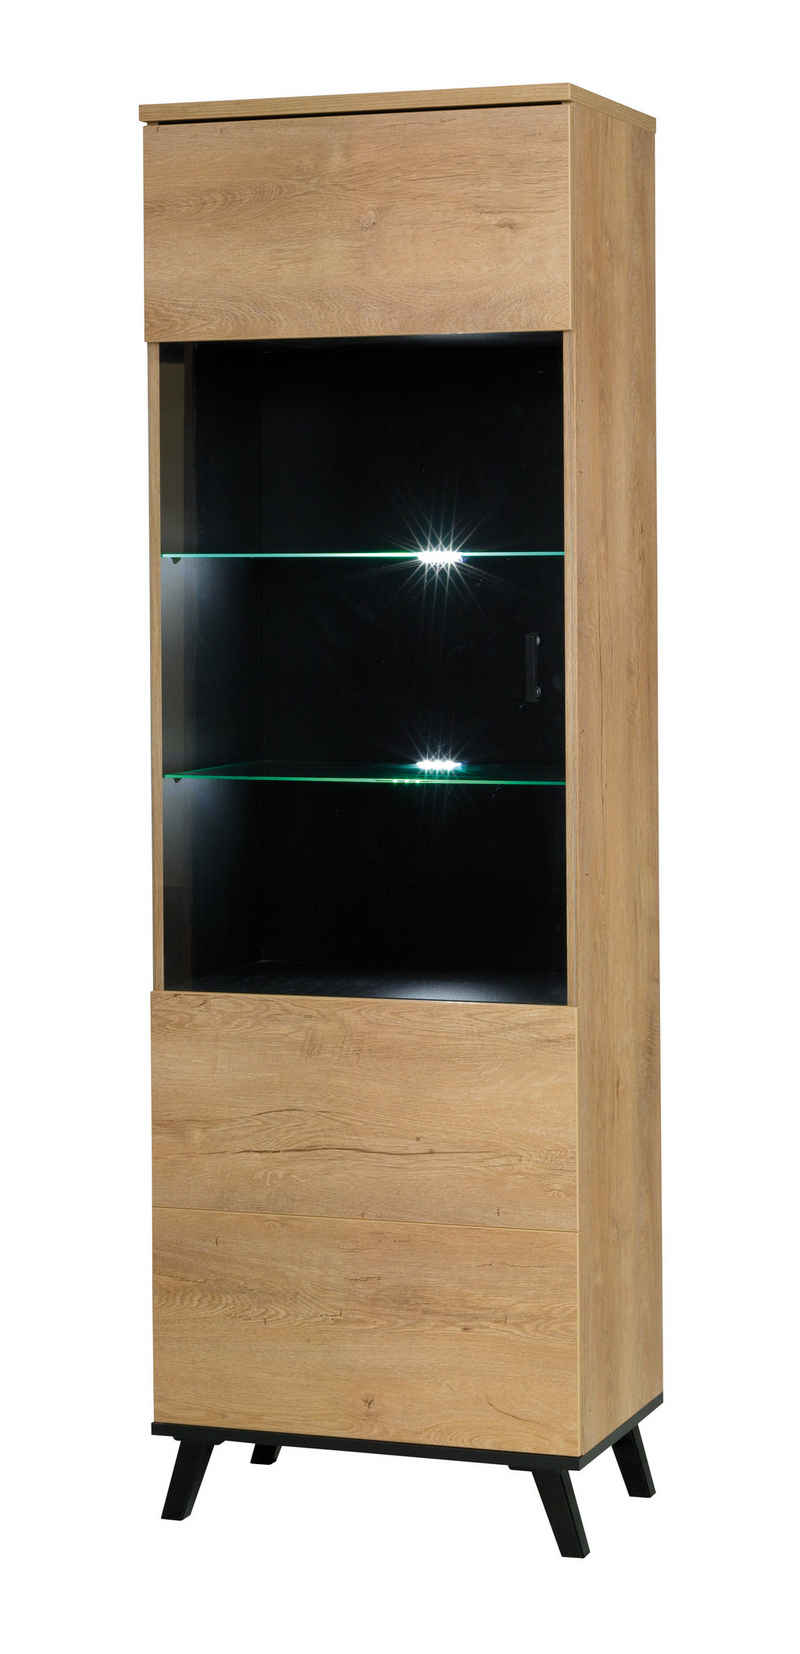 Beautysofa Vitrine Moderne elegante hohe LED-Beleuchtung Jenny 02 (Farbe: eiche lefkas + schwarz) B:61/H:191/T:40cm